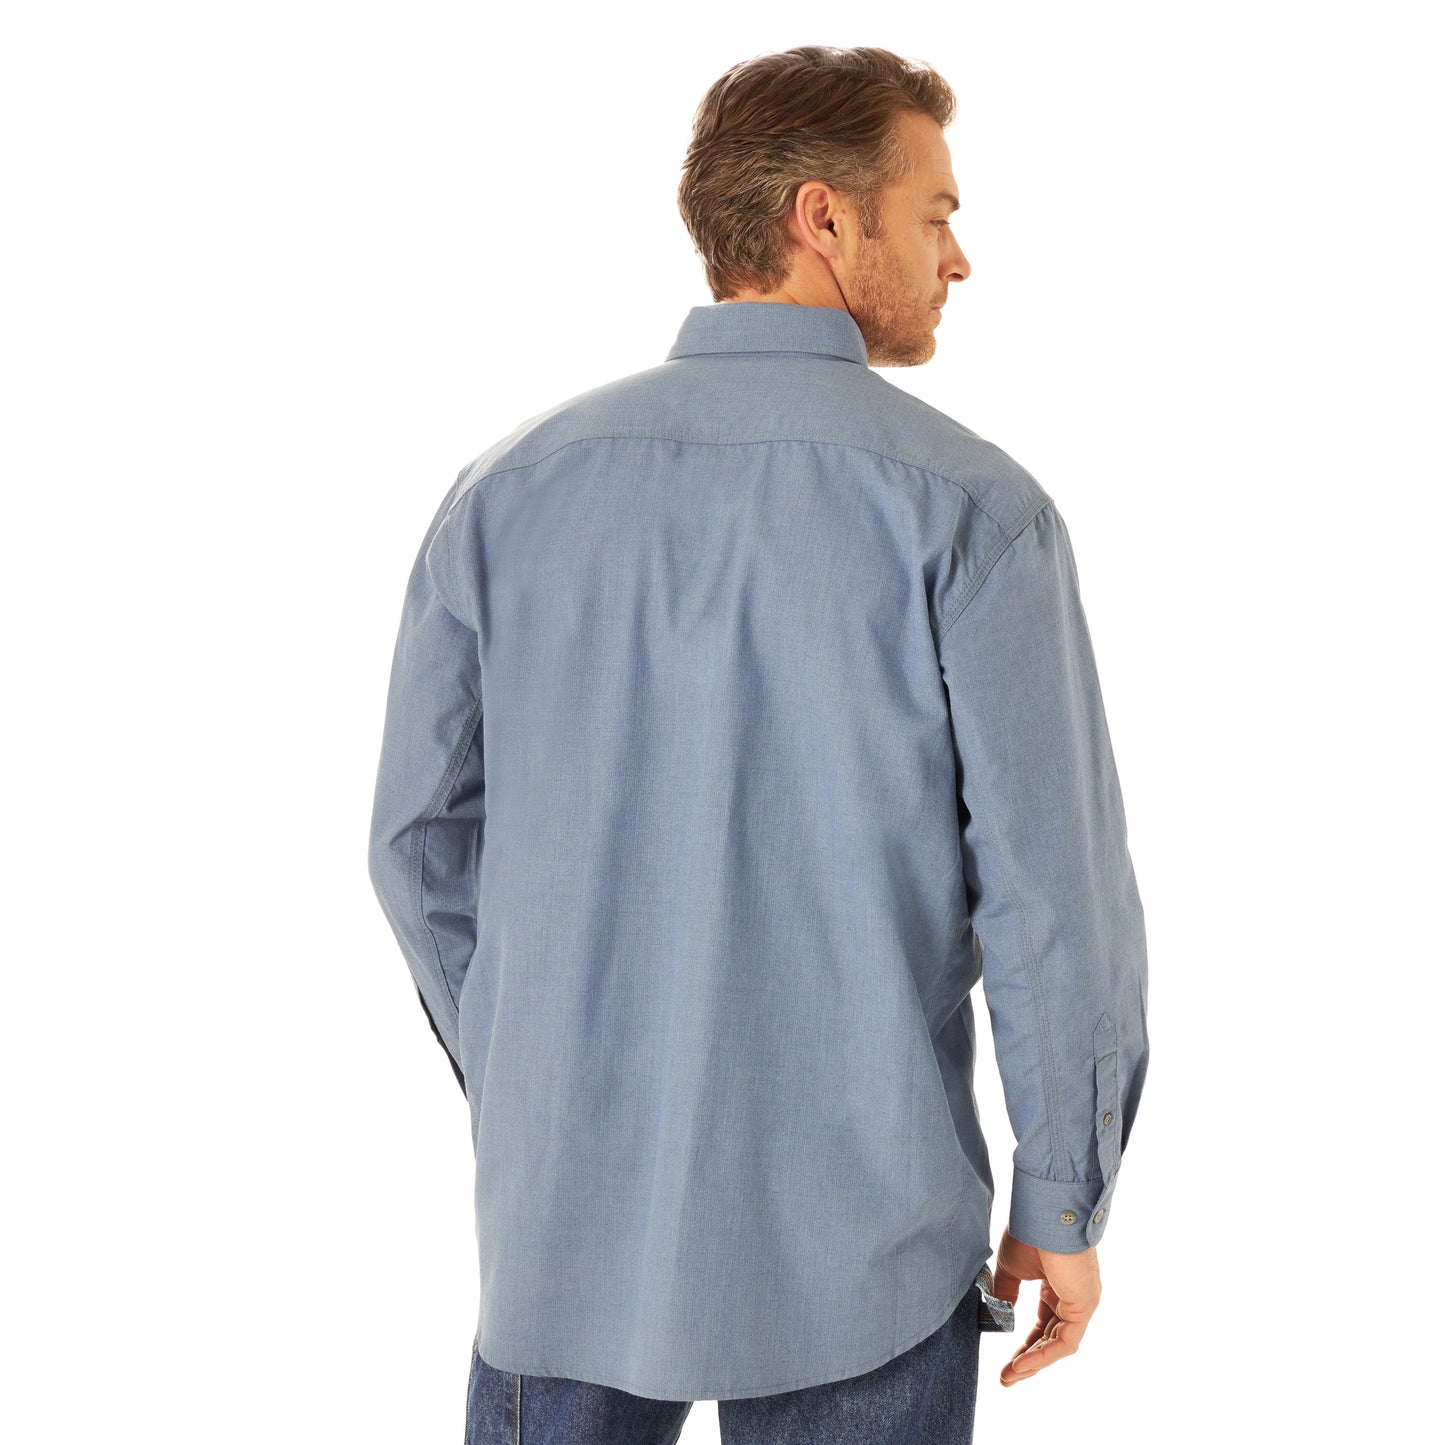 fr3w01l Men's FR Flame Resistant Long Sleeve Work Shirt by Wrangler